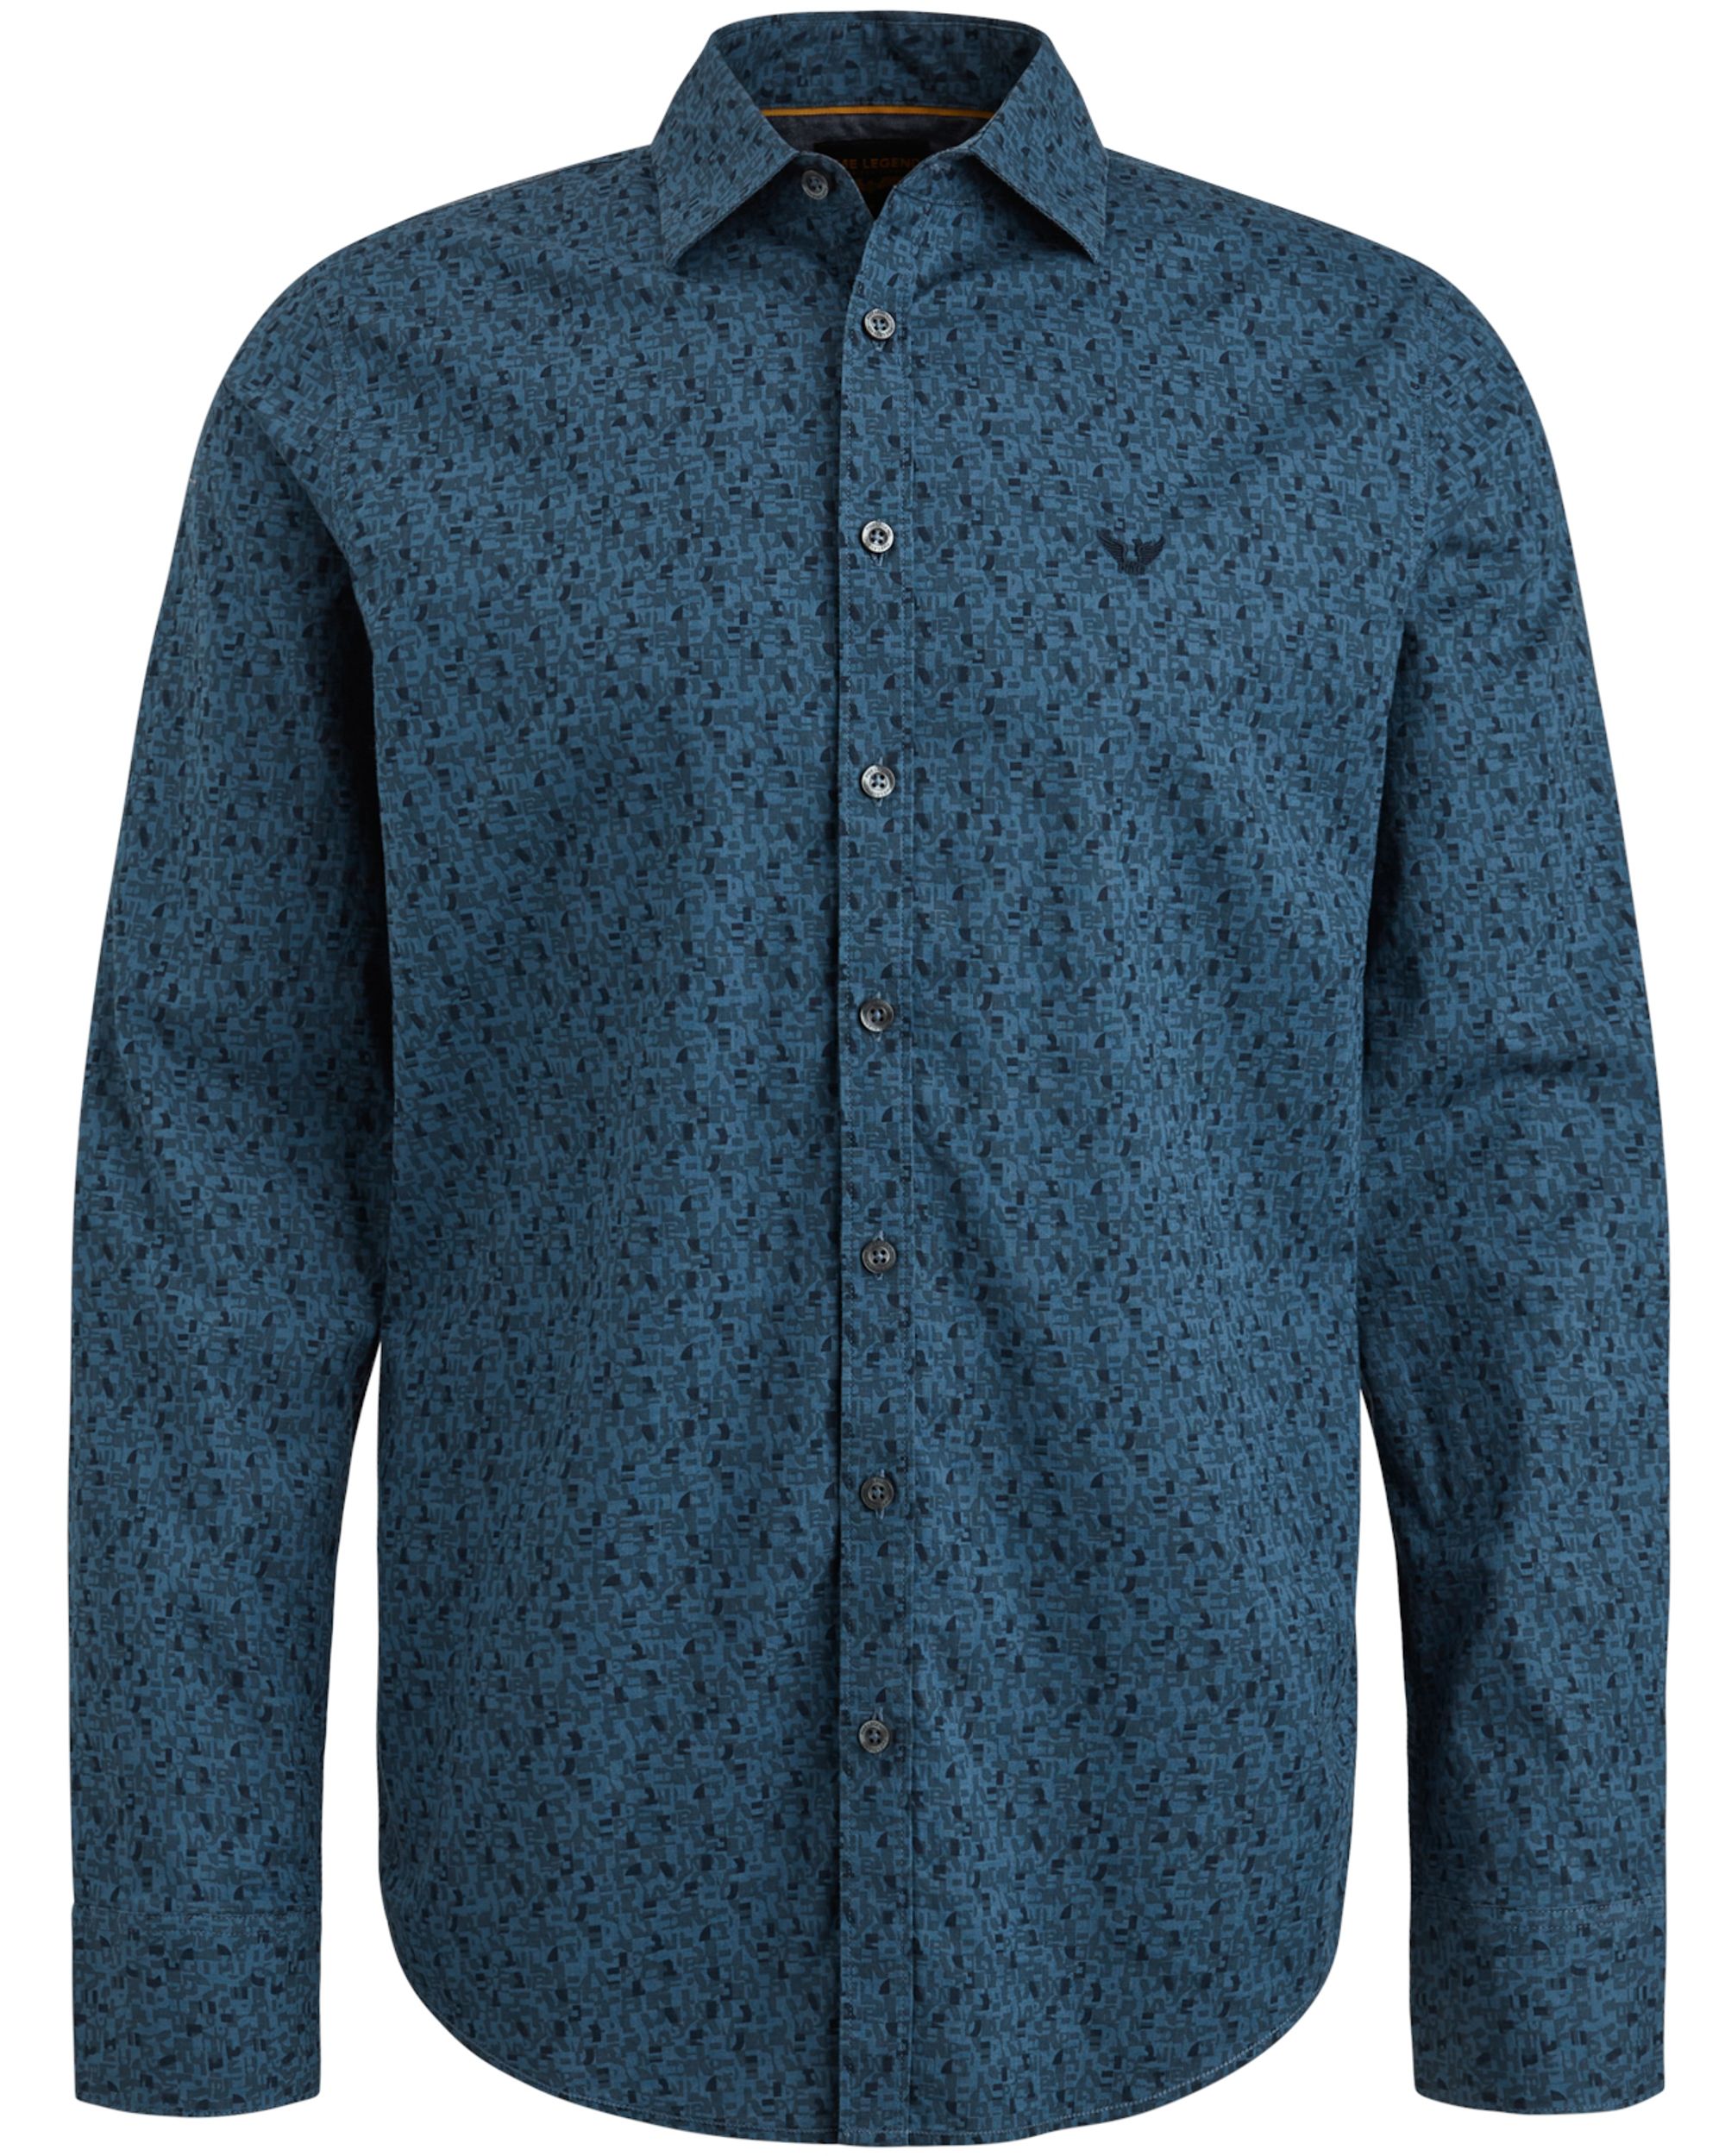 PME Legend Casual Overhemd LM Blauw 092330-001-L